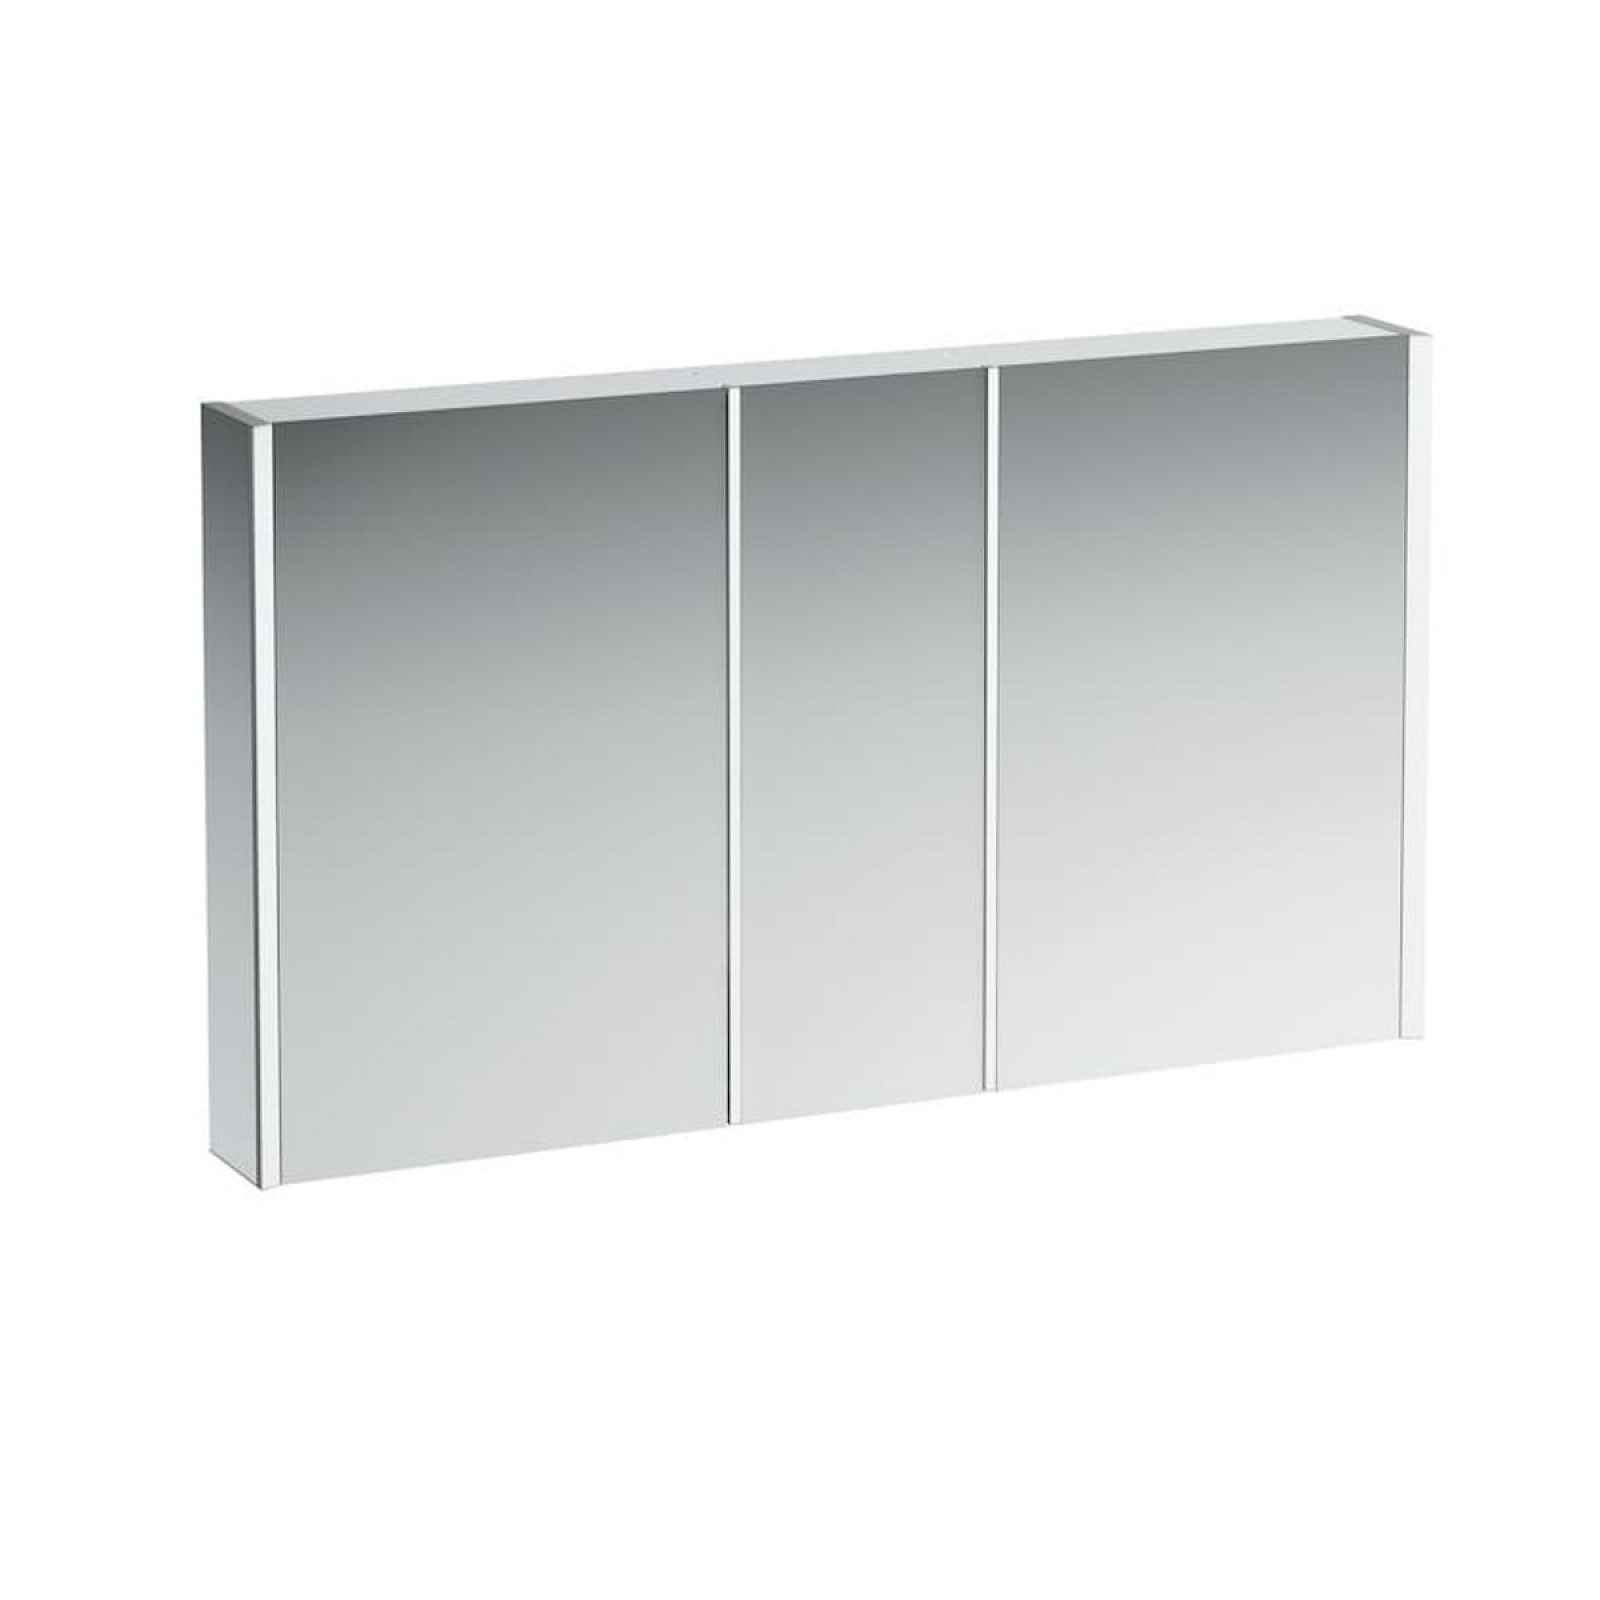 Zrcadlová skříňka s osvětlením Laufen Frame 130x75 cm H4087549001441